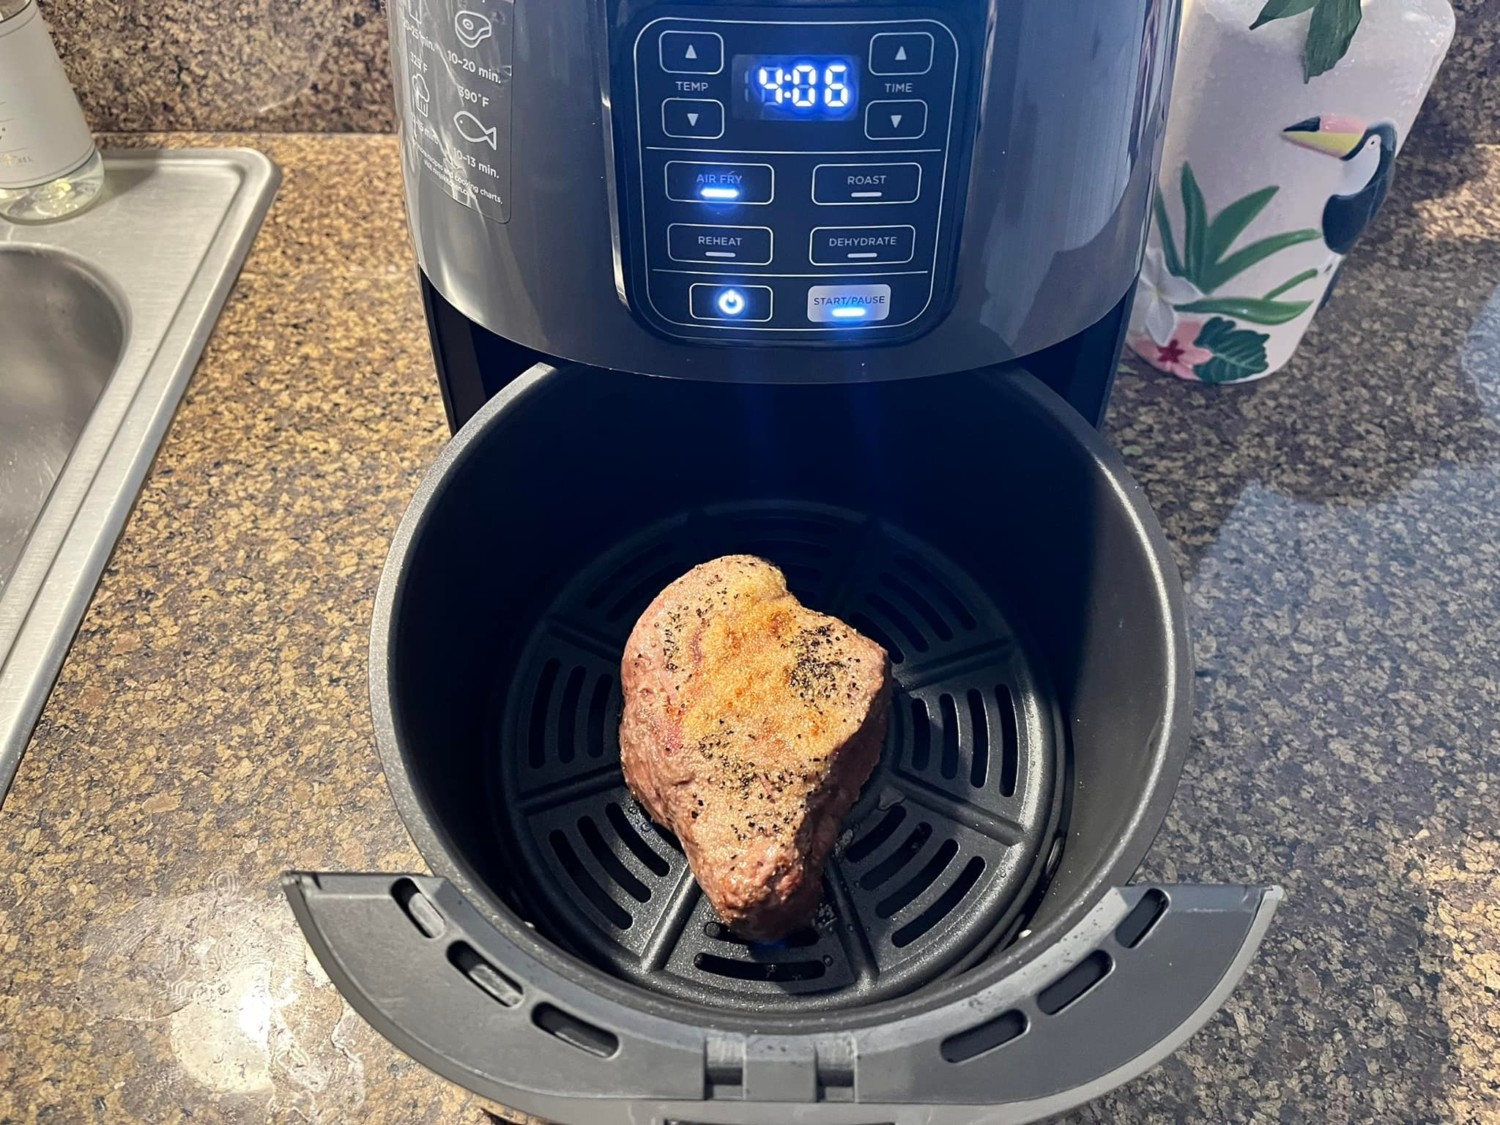 Steak mid-way through cooking in the air fryer